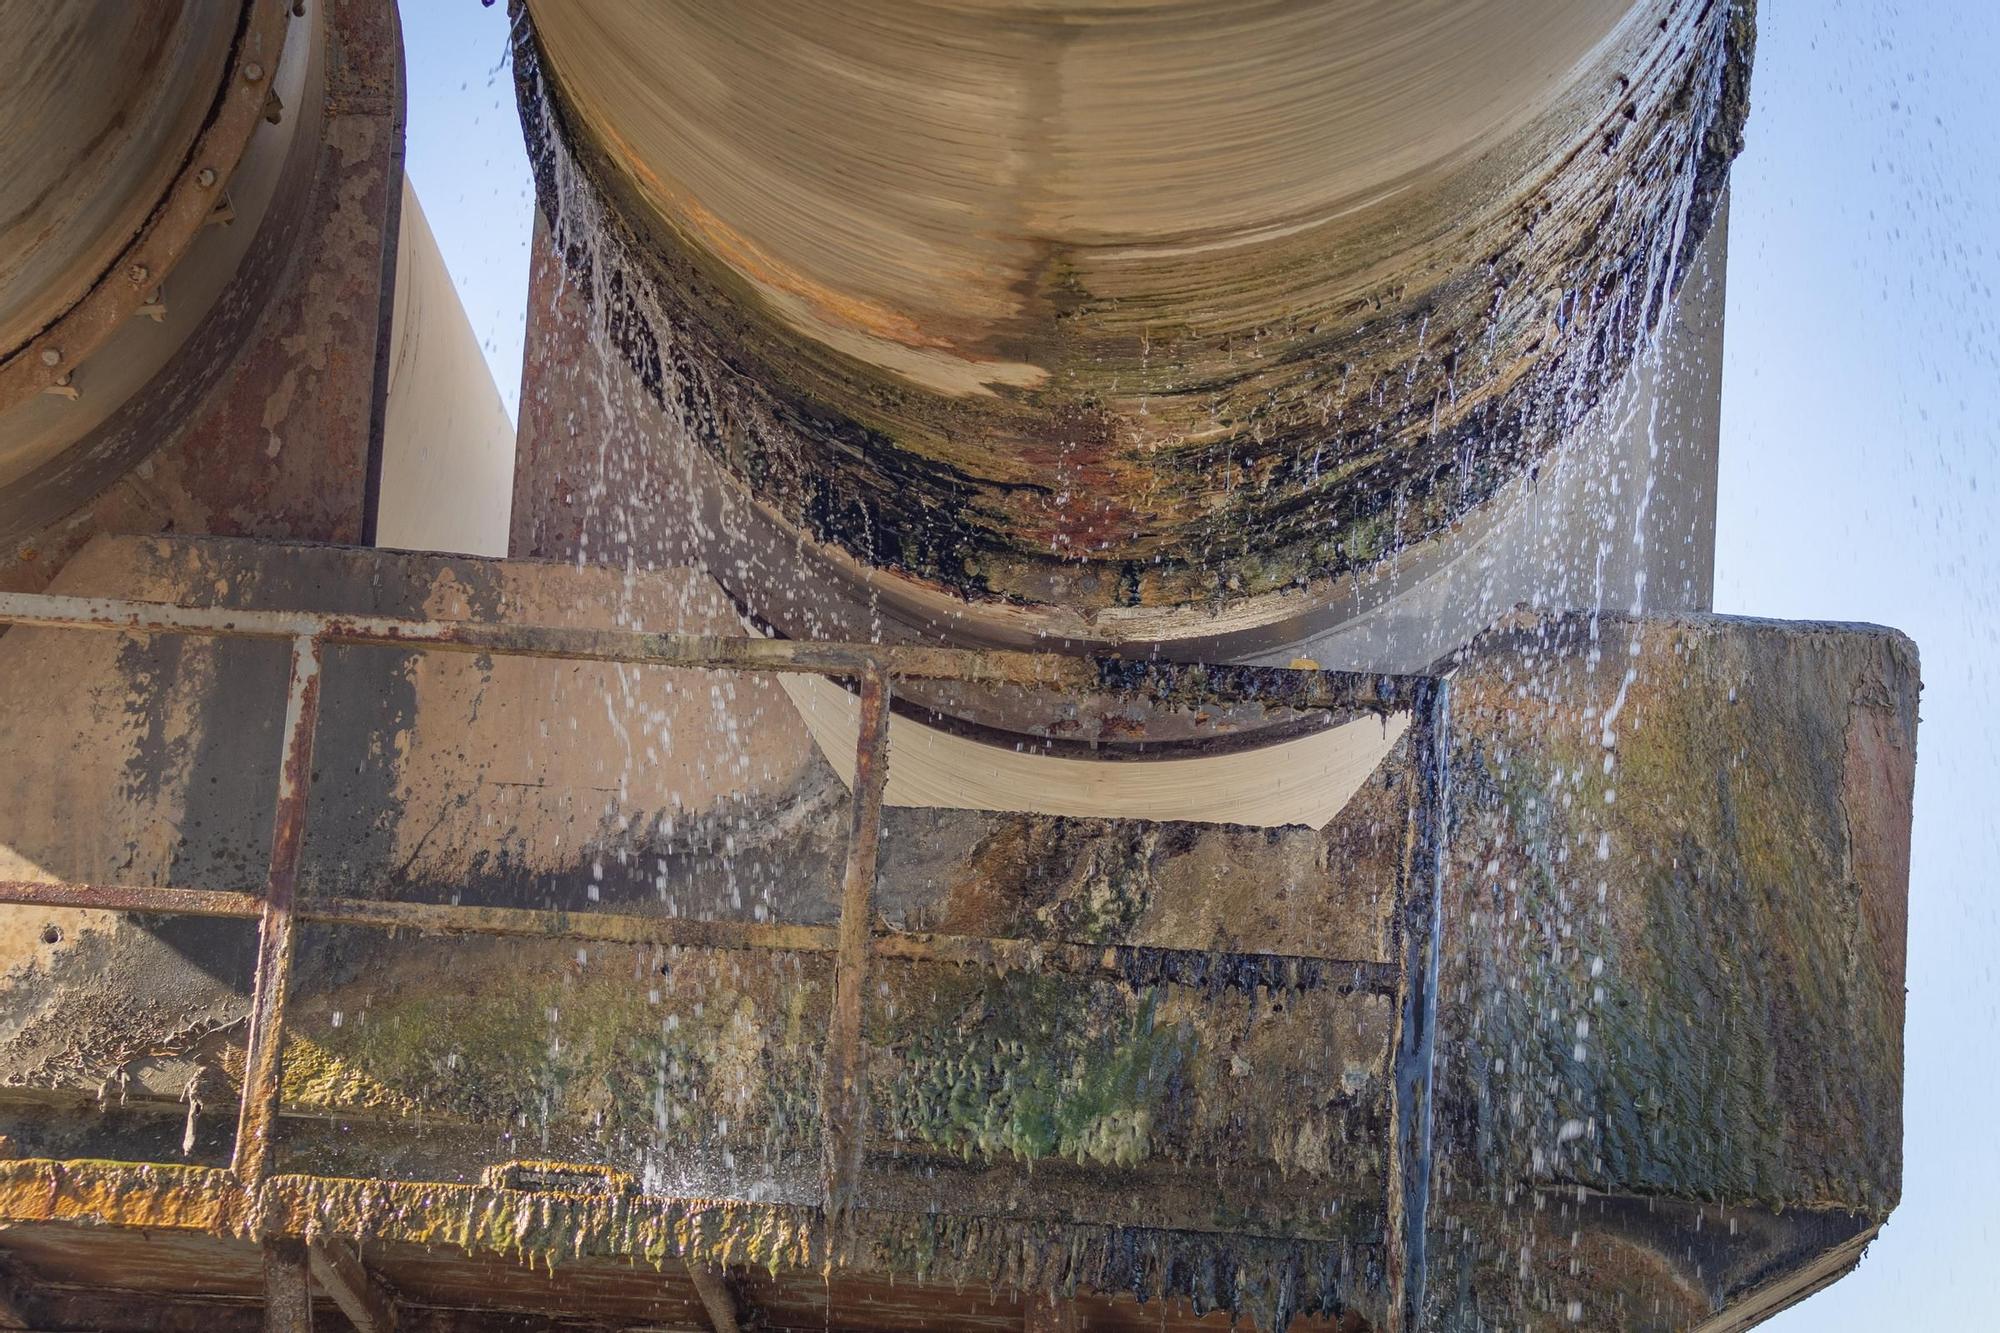 Treintena de fugas en los tubos del Trasvase Tajo-Segura